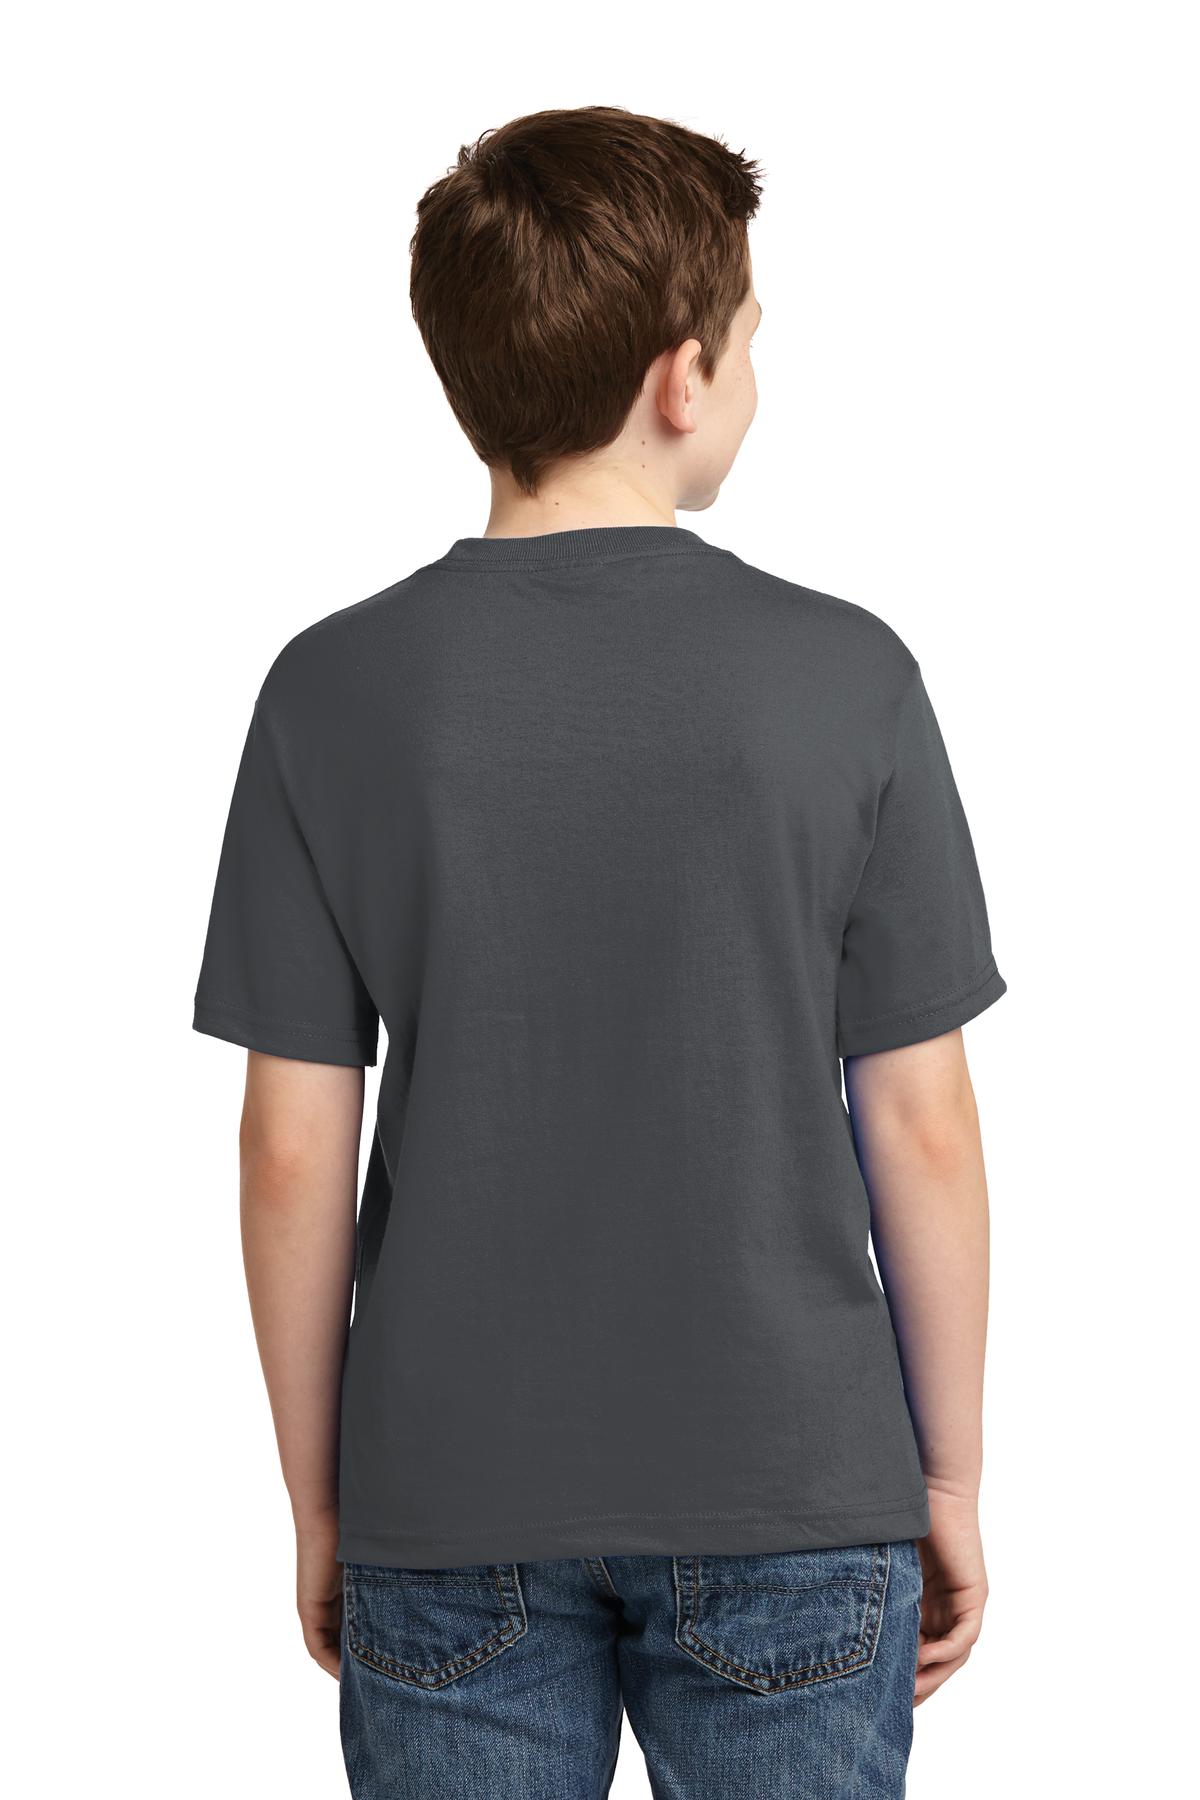 JERZEES® - Youth Dri-Power® 50/50 Cotton/Poly T-Shirt. 29B [Charcoal Grey] - DFW Impression